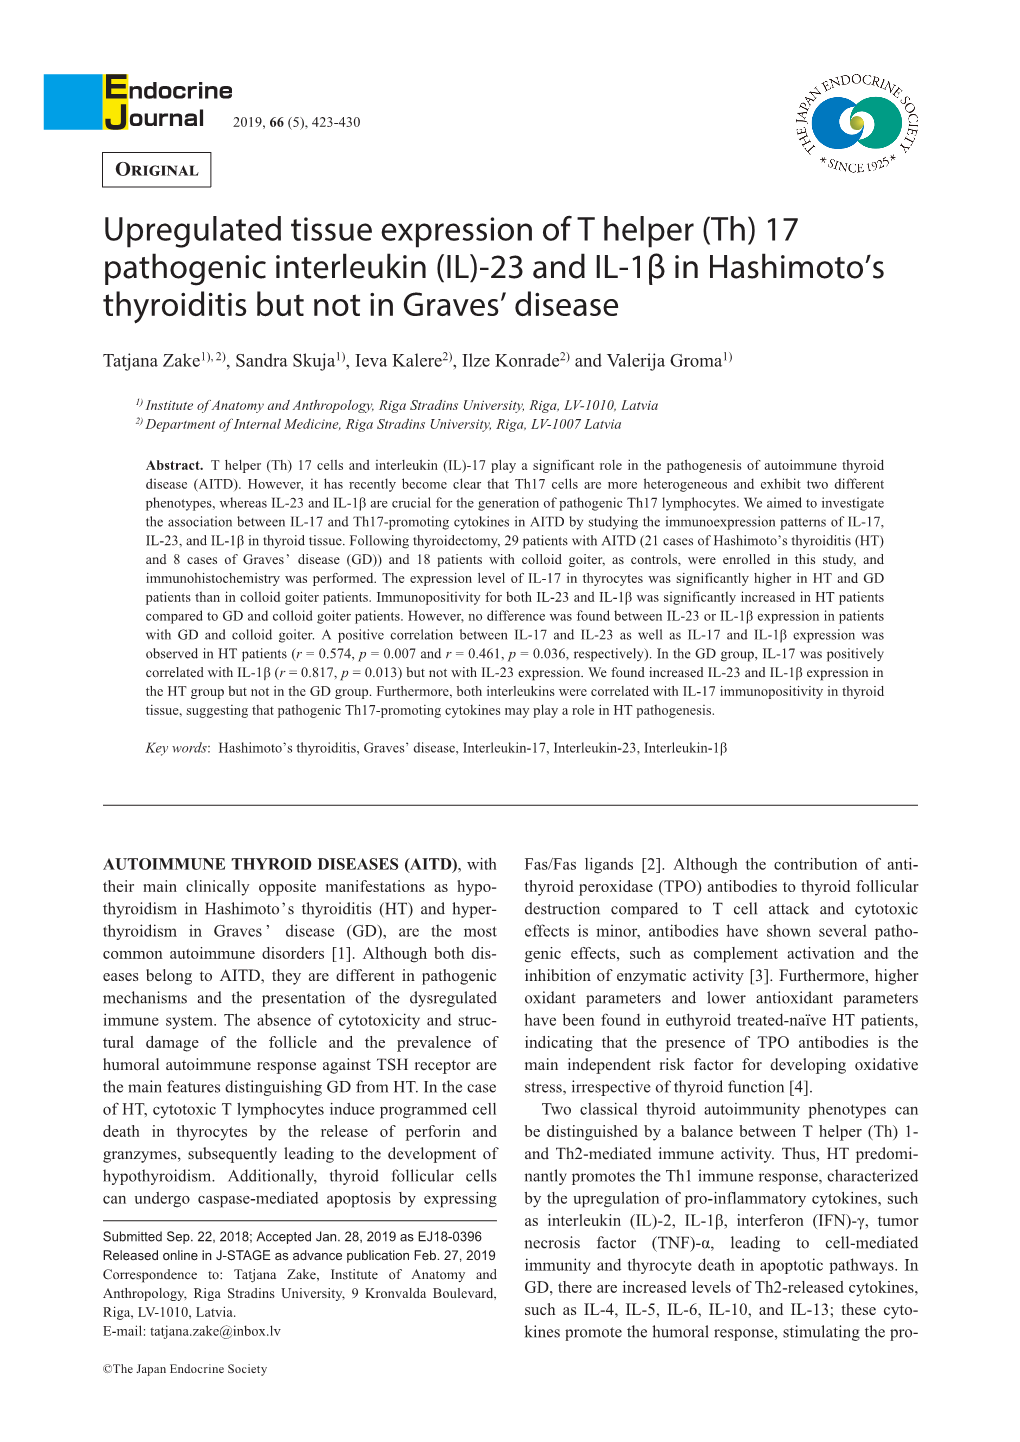 17 Pathogenic Interleukin (IL)-23 and IL-1Β in Hashimoto's Thyroiditis But